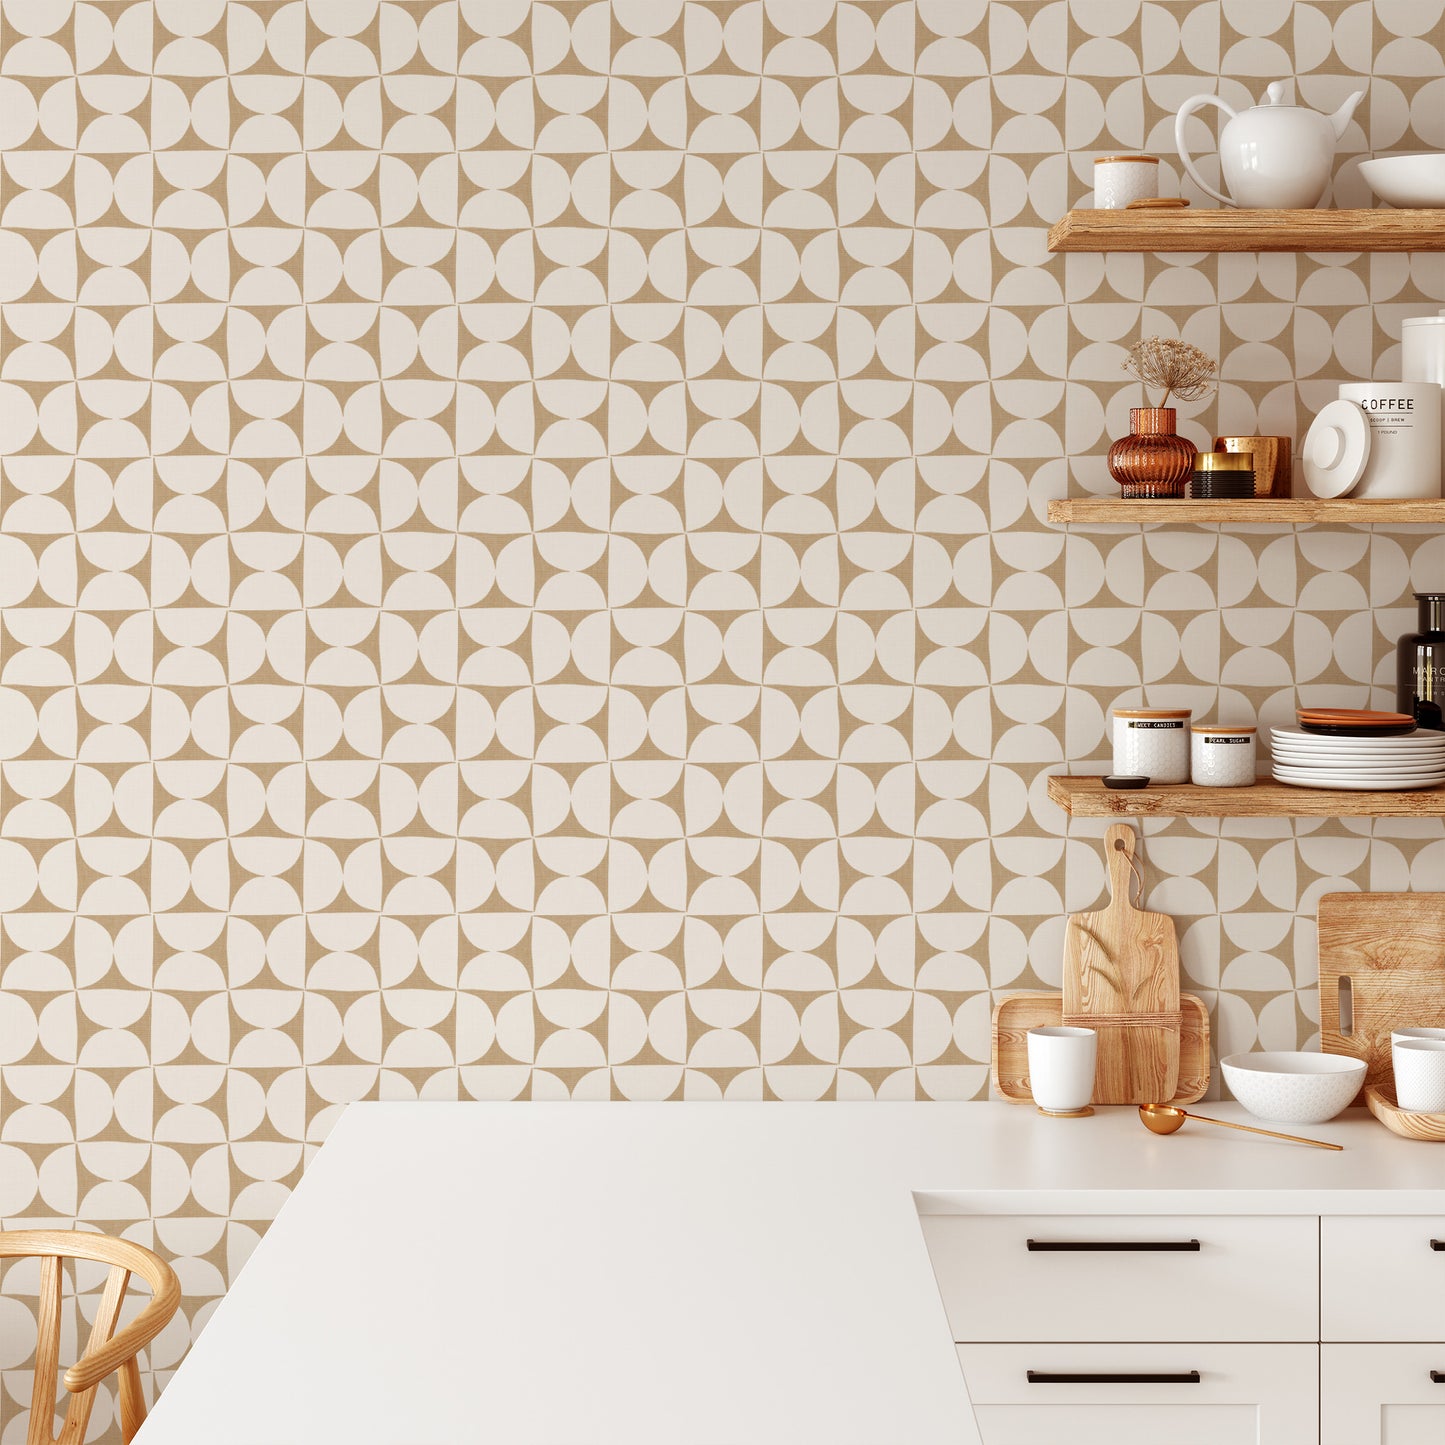 Half Circle Tile Wallpaper - Cream on Beige